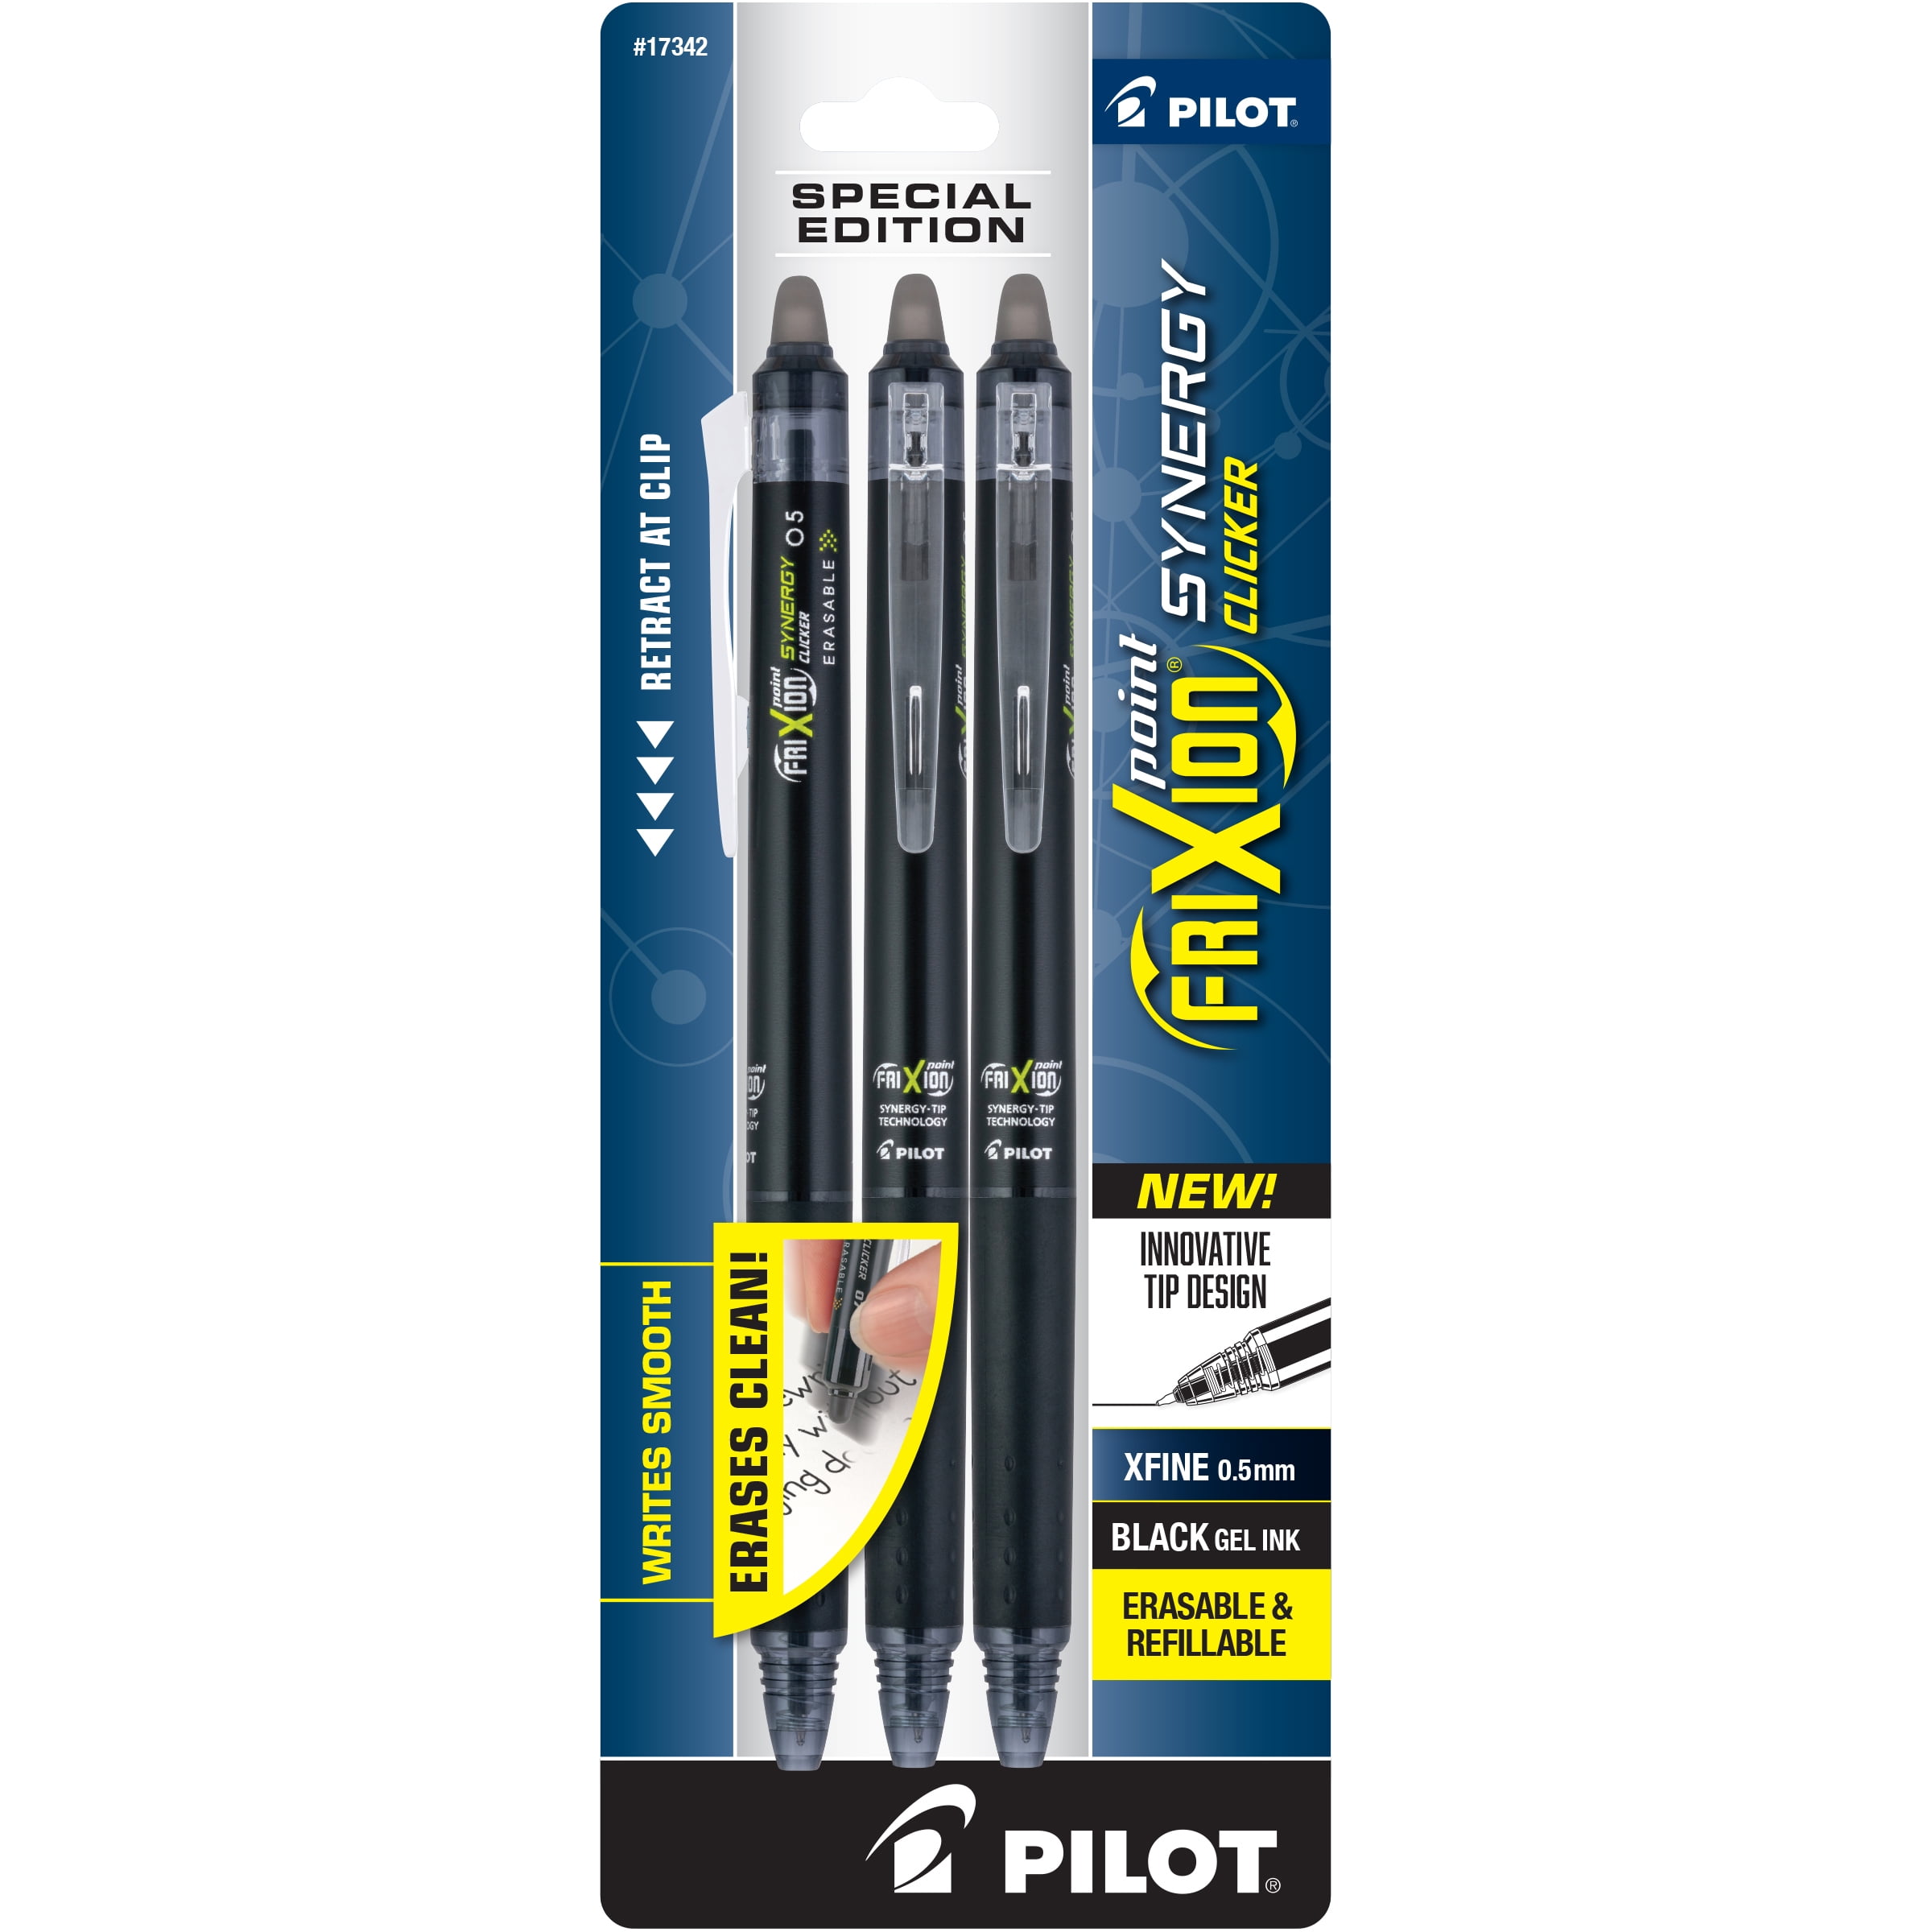 Pilot FriXion Clicker Ball Point Pens